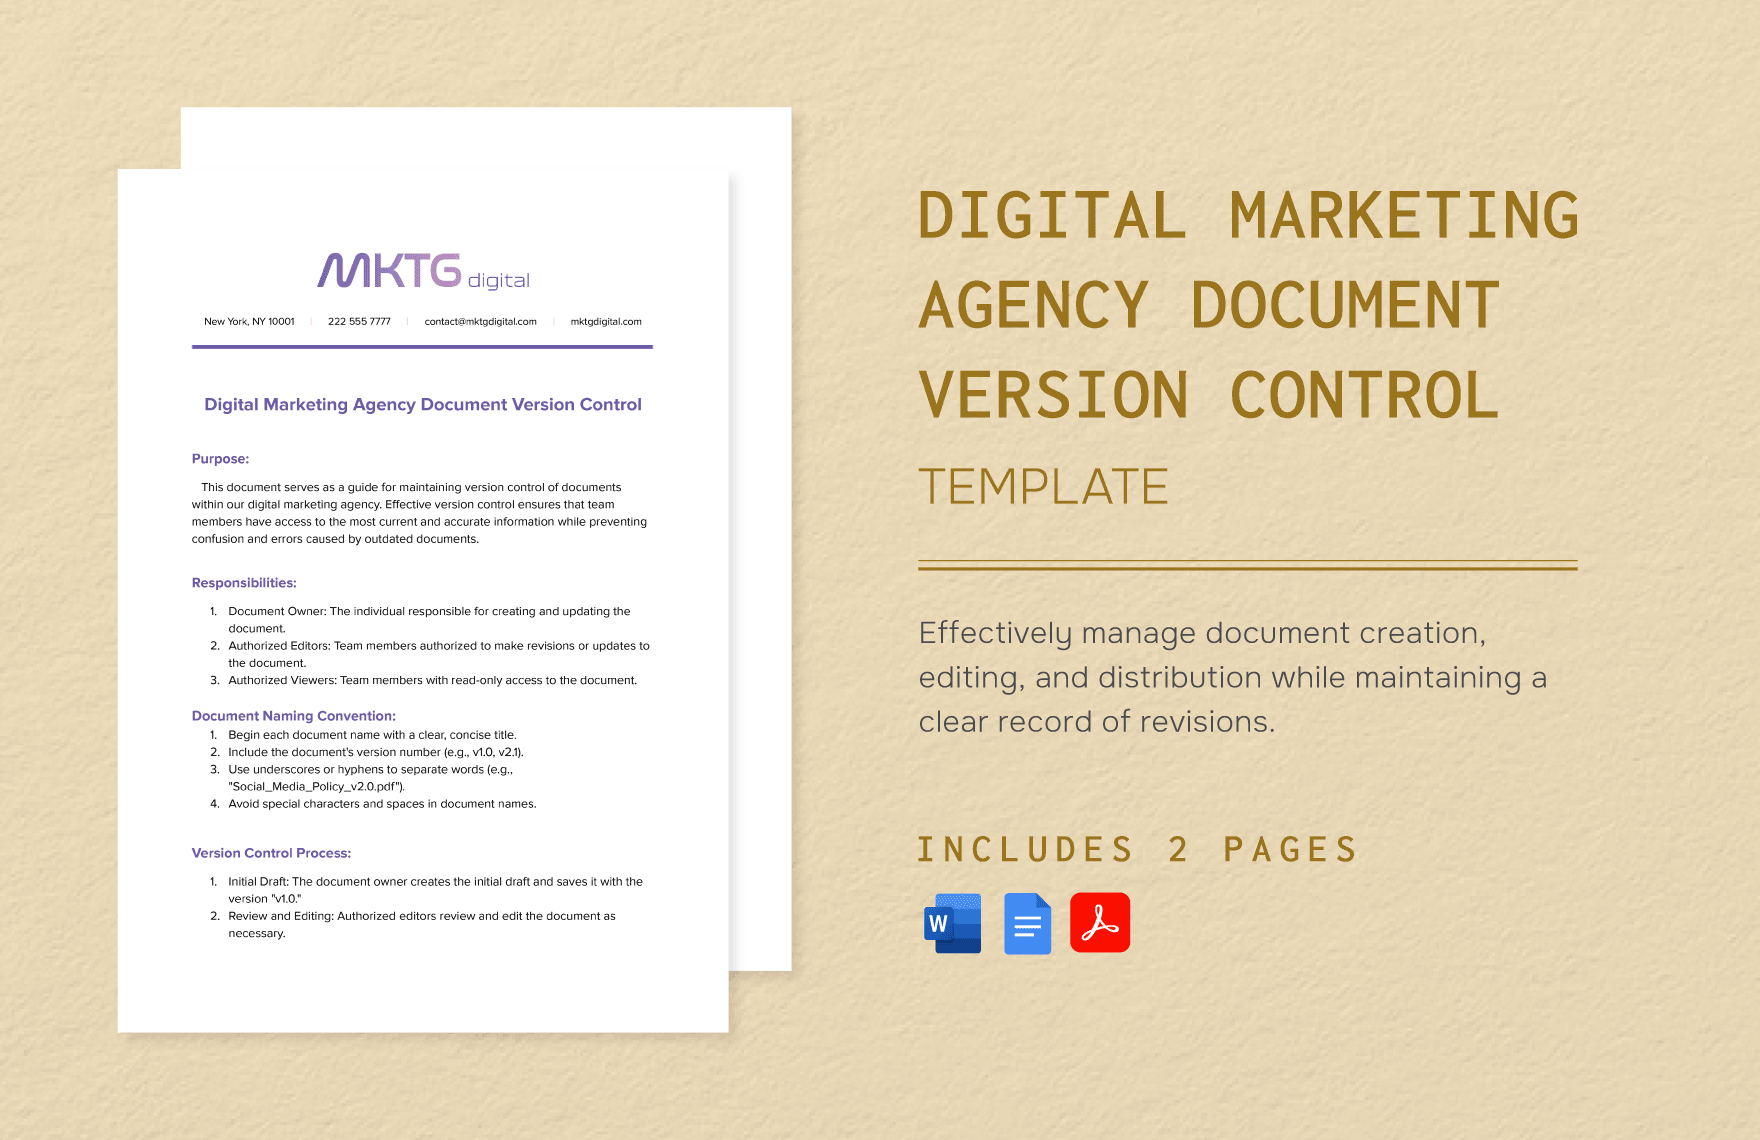 Digital Marketing Agency Document Version Control Template